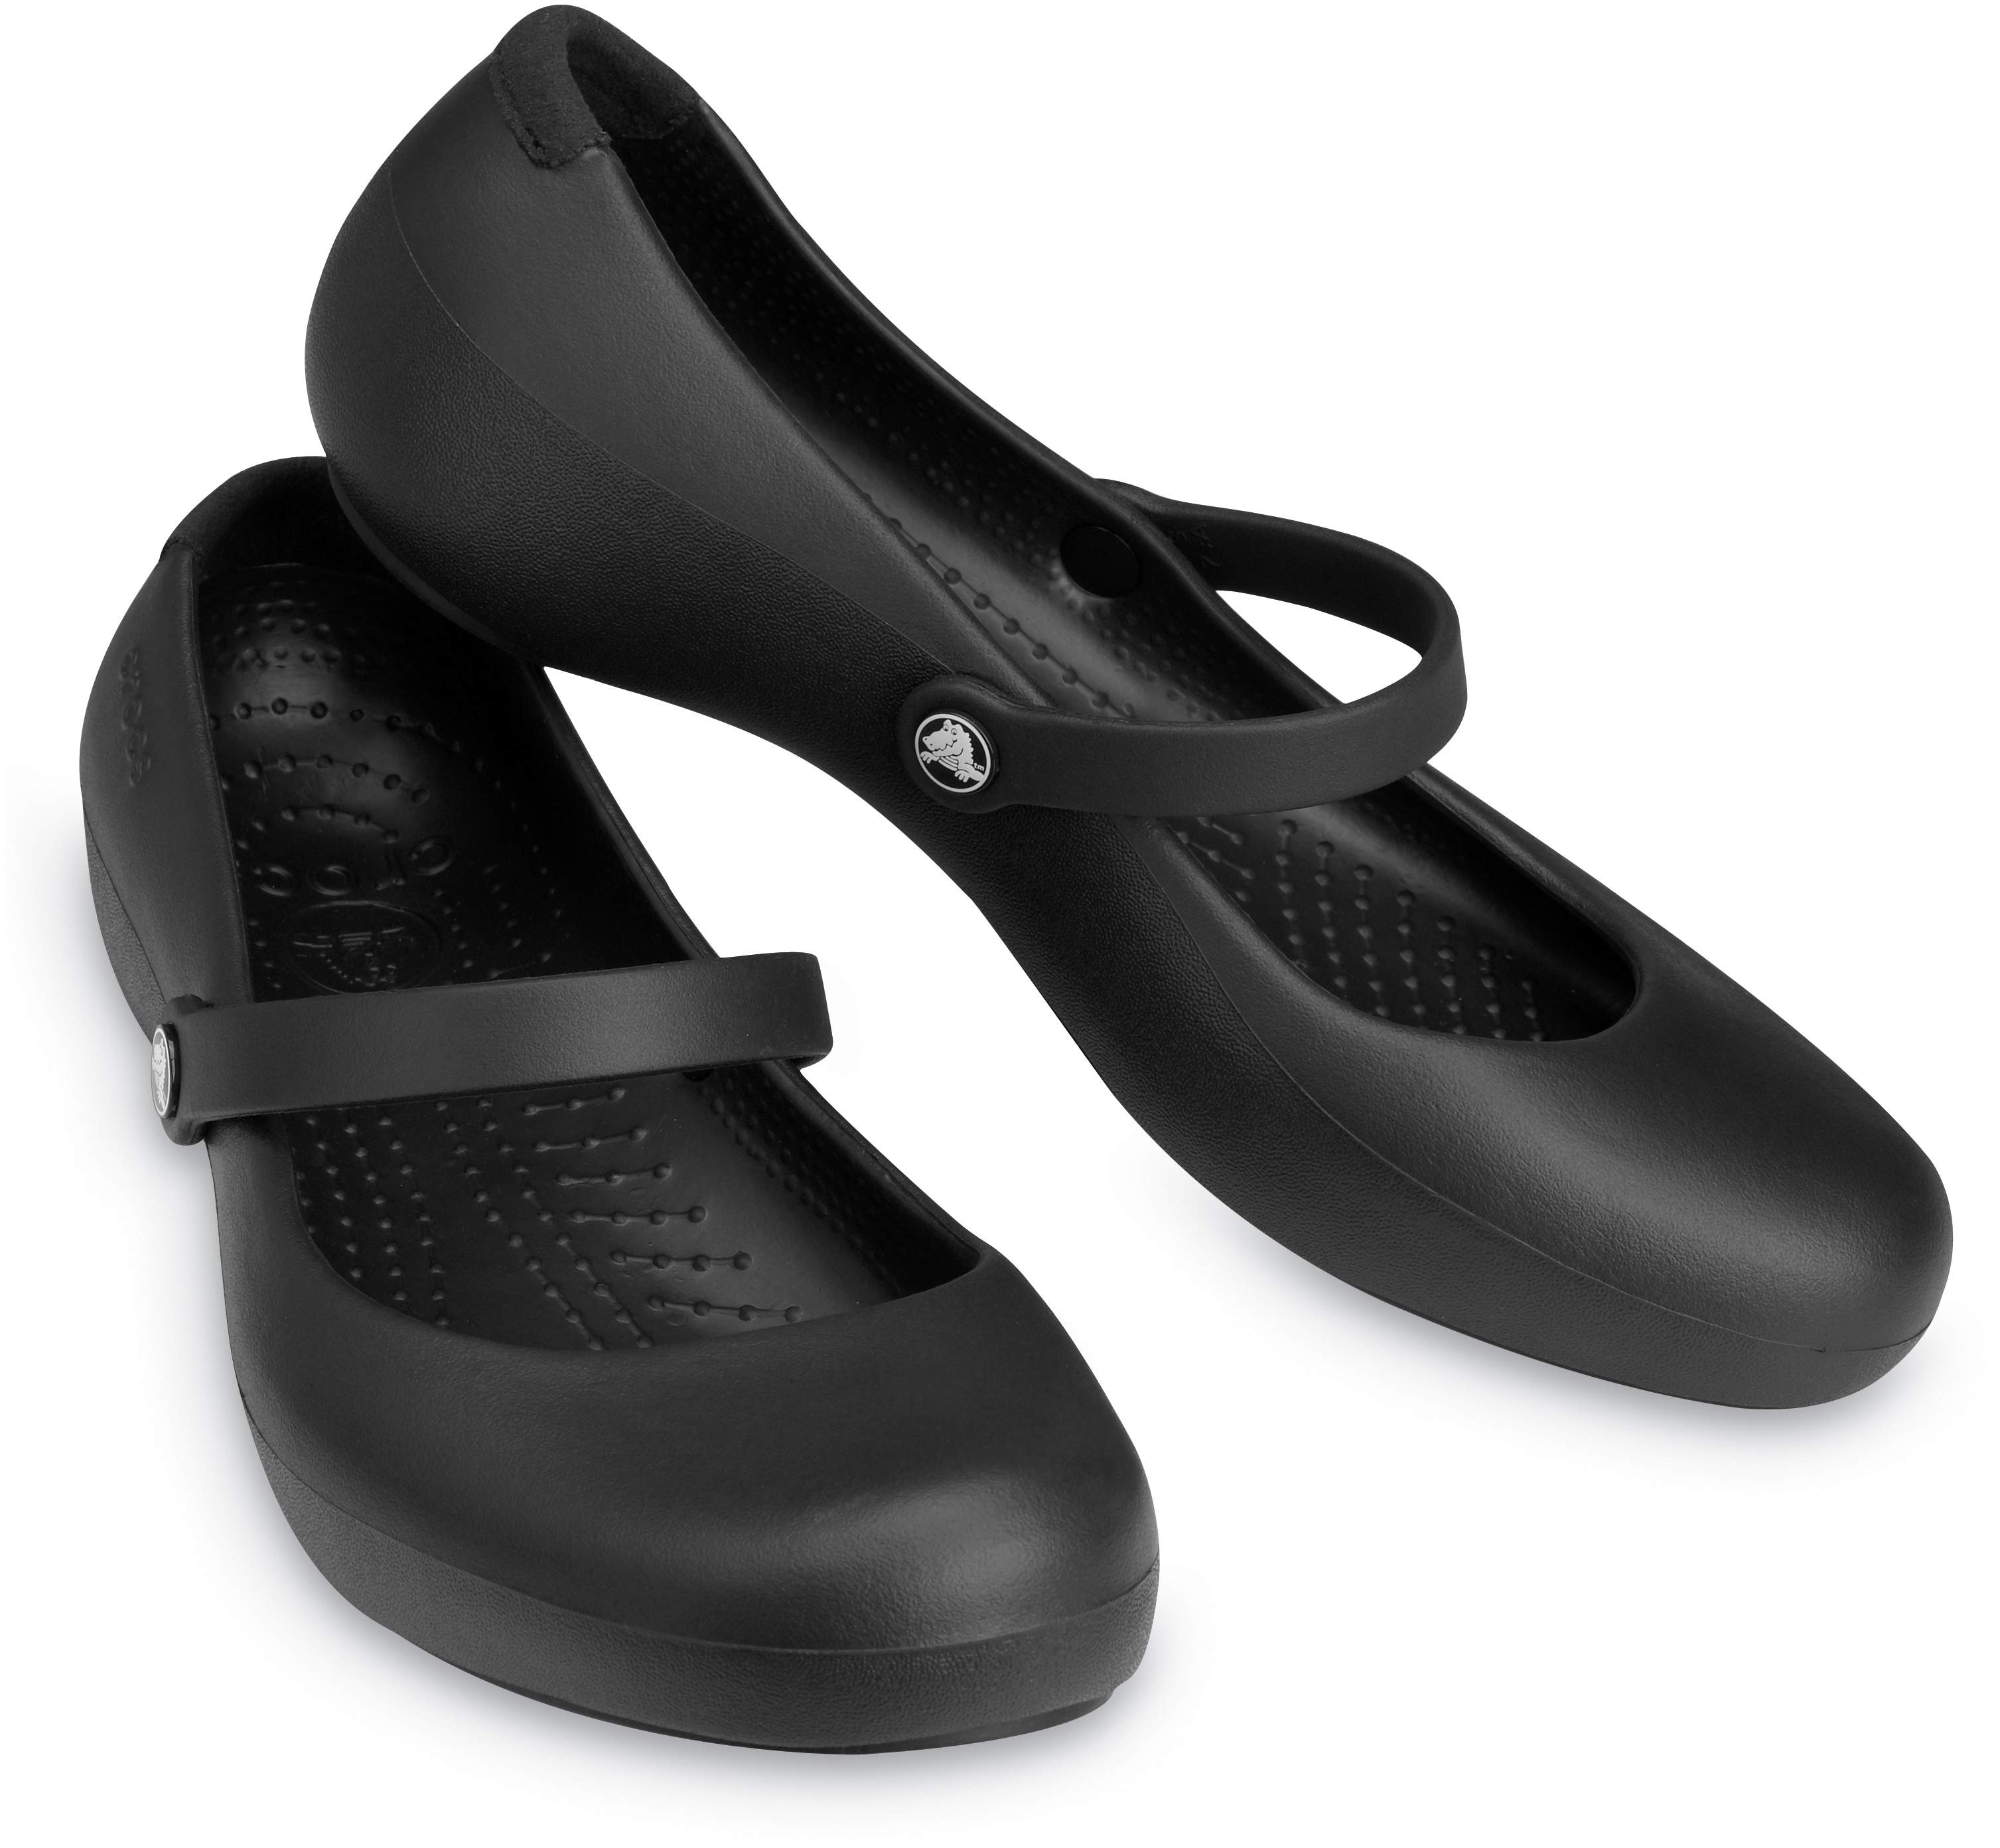 crocs women's slip on shoes